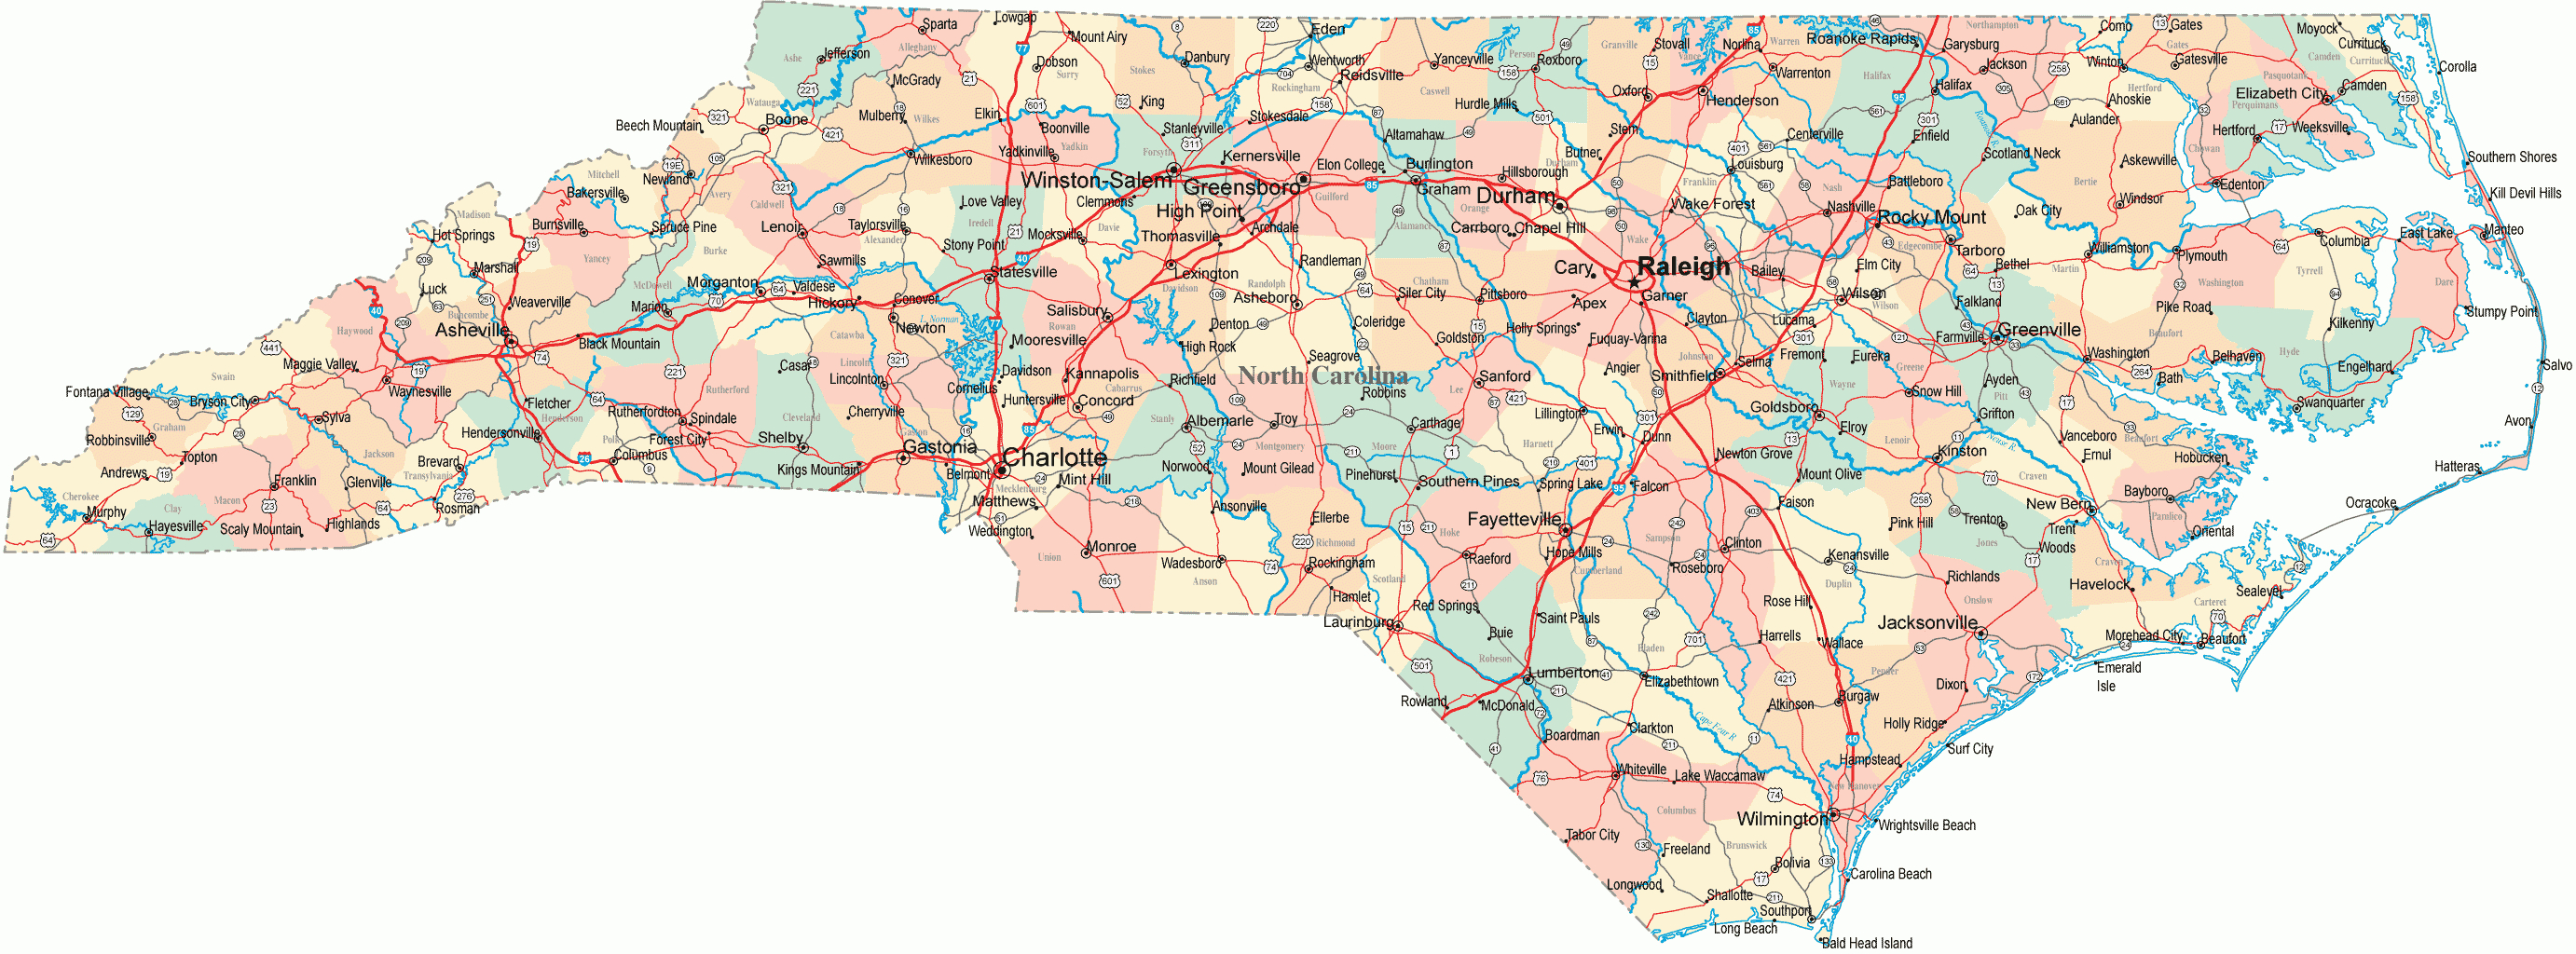 North Carolina Map - Free Large Images | Pinehurstl | Pinterest - Printable Map Of North Carolina